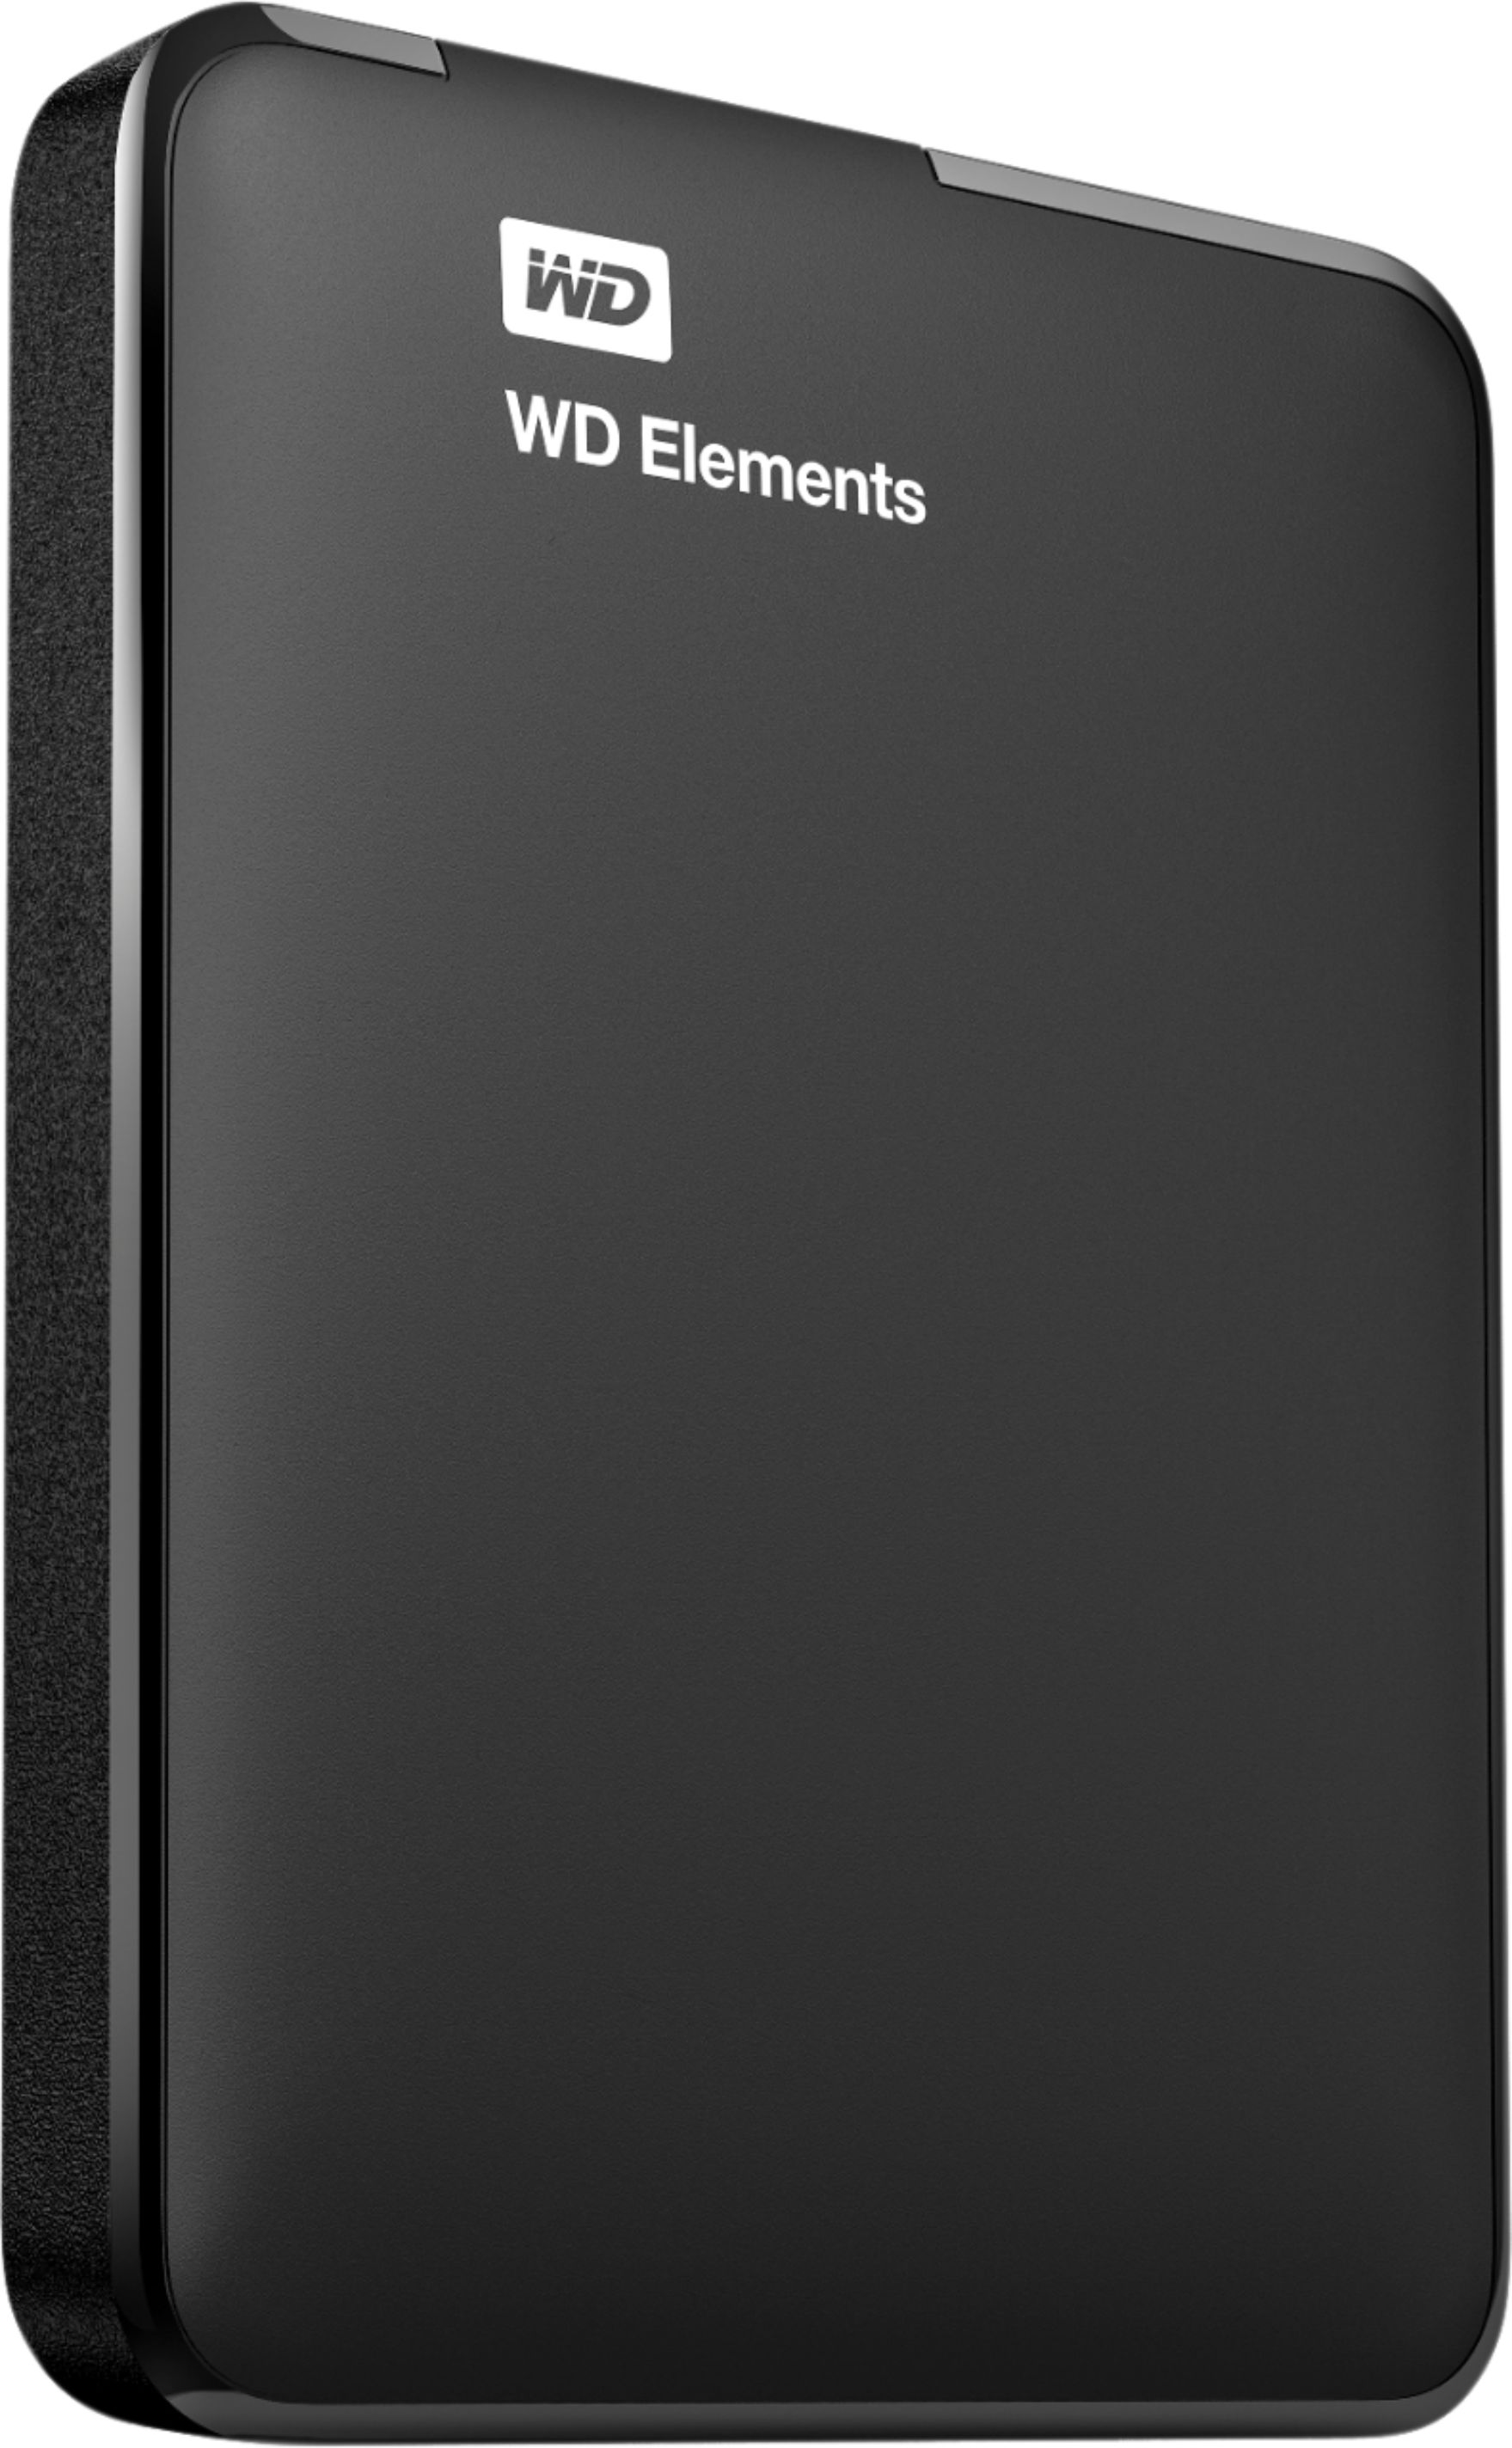 Angle View: WD - Elements 2TB External USB 3.0 Portable Hard Drive - Black